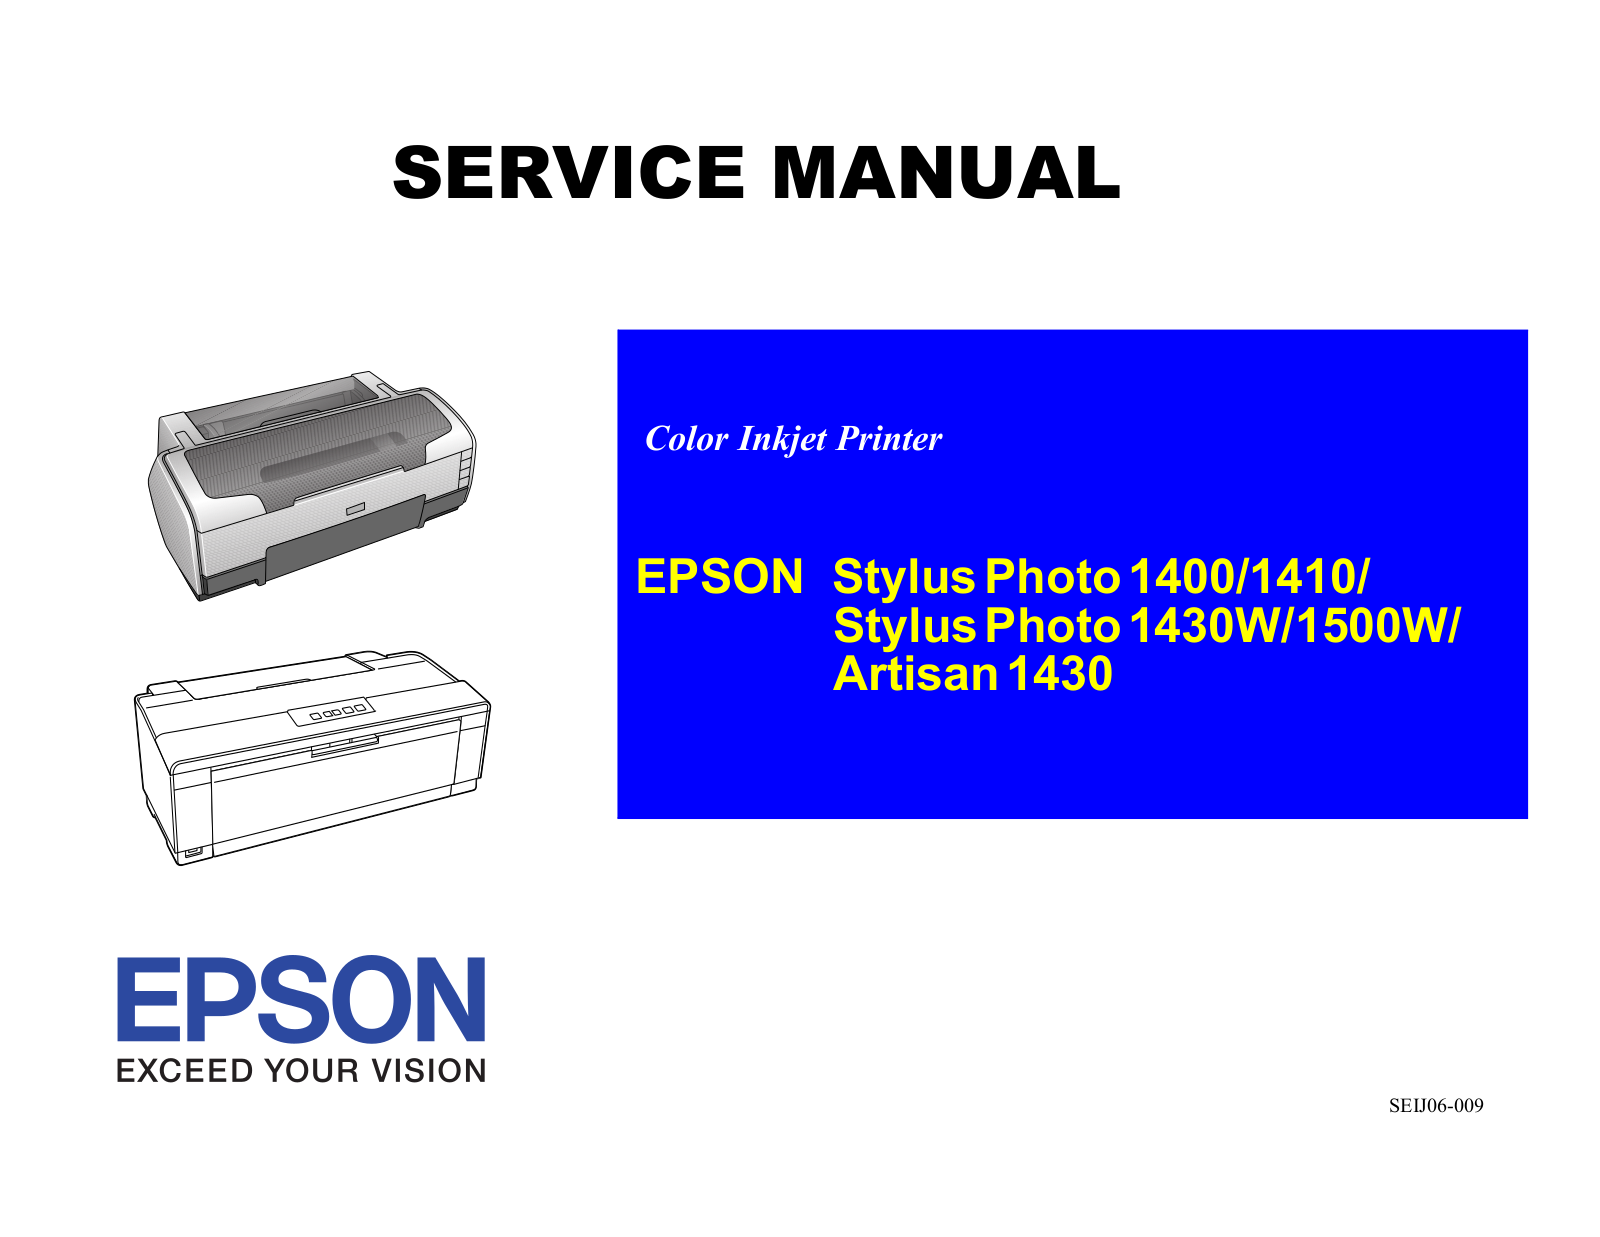 EPSON Stylus Photo 1400, Stylus Photo 1410, Stylus Photo 1430w, Stylus Photo 1500w Service Manual